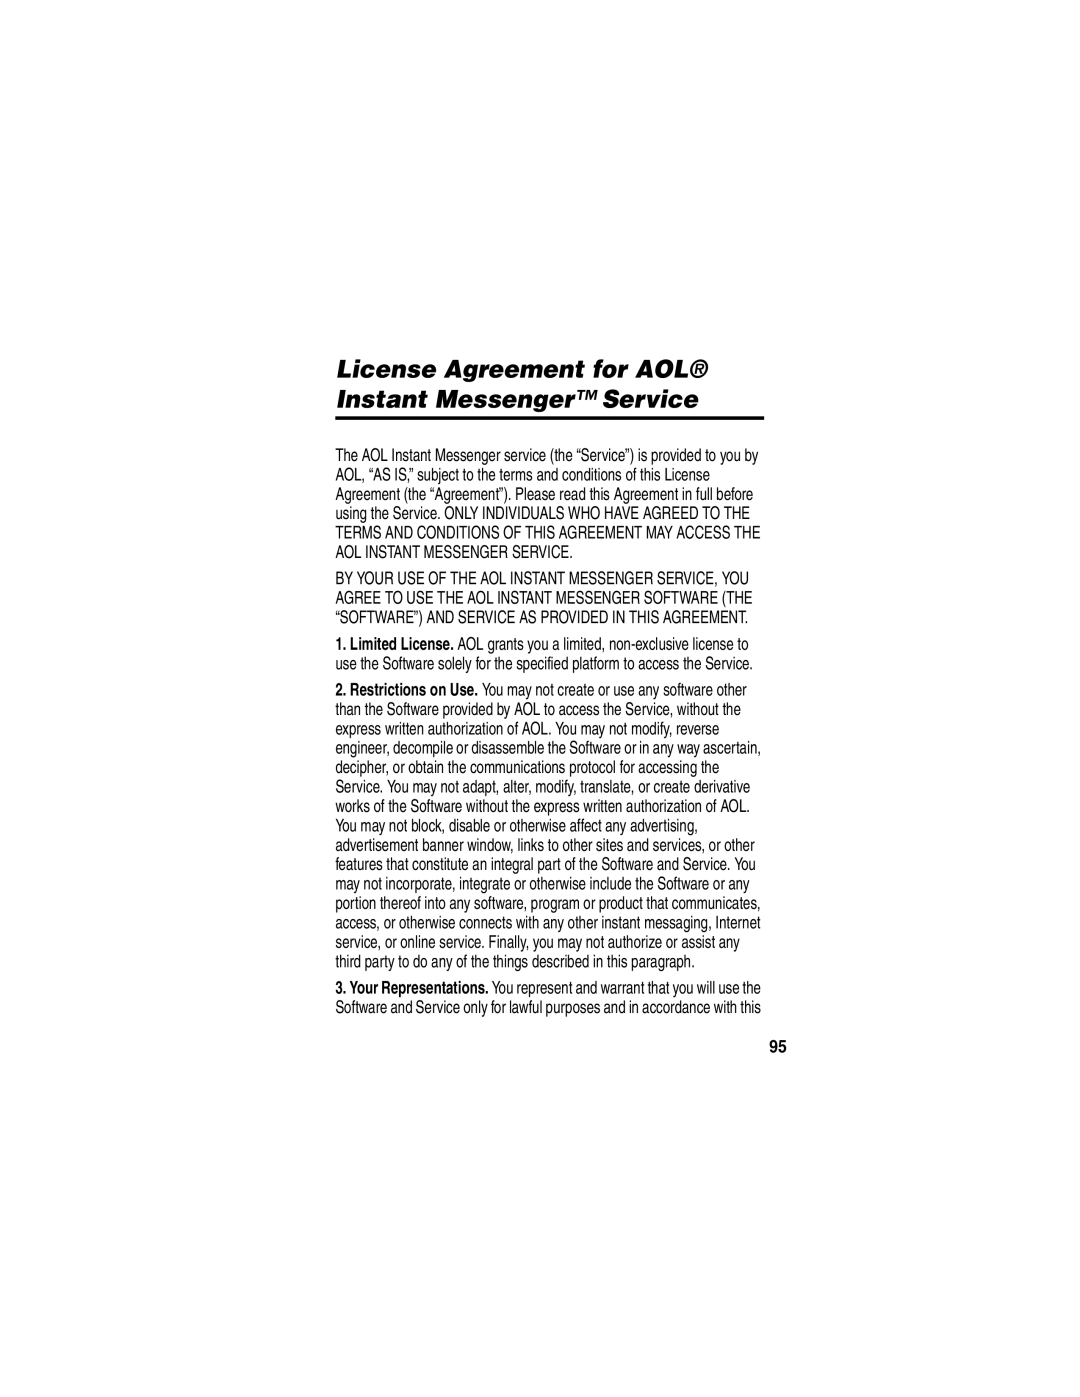 Motorola V330 manual License Agreement for AOL Instant Messenger Service 